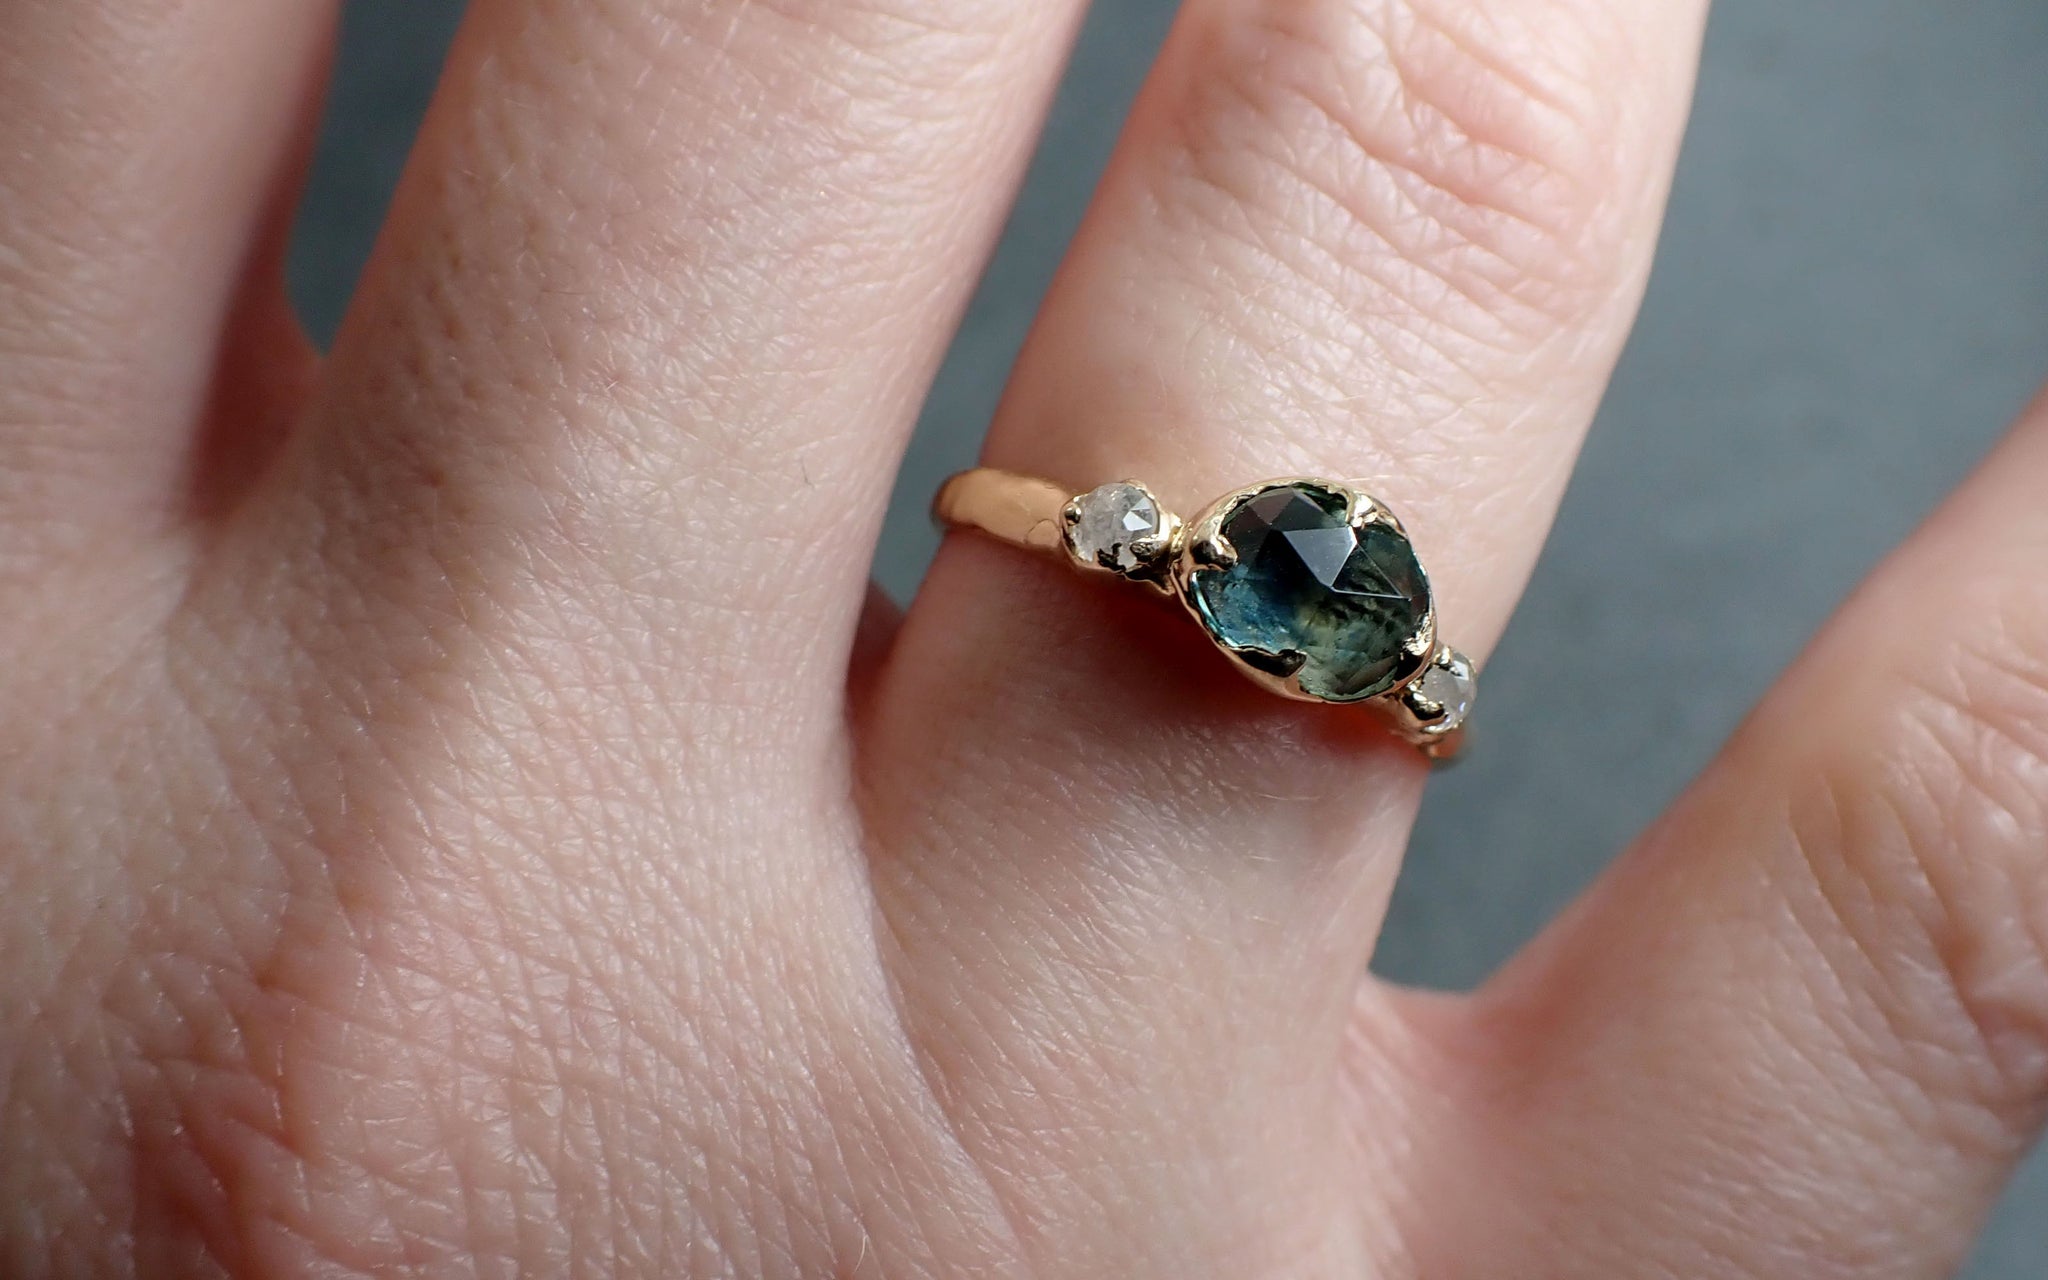 fancy cut blue montana sapphire and fancy cut diamonds 18k yellow gold engagement wedding ring gemstone ring multi stone ring 2812 Alternative Engagement